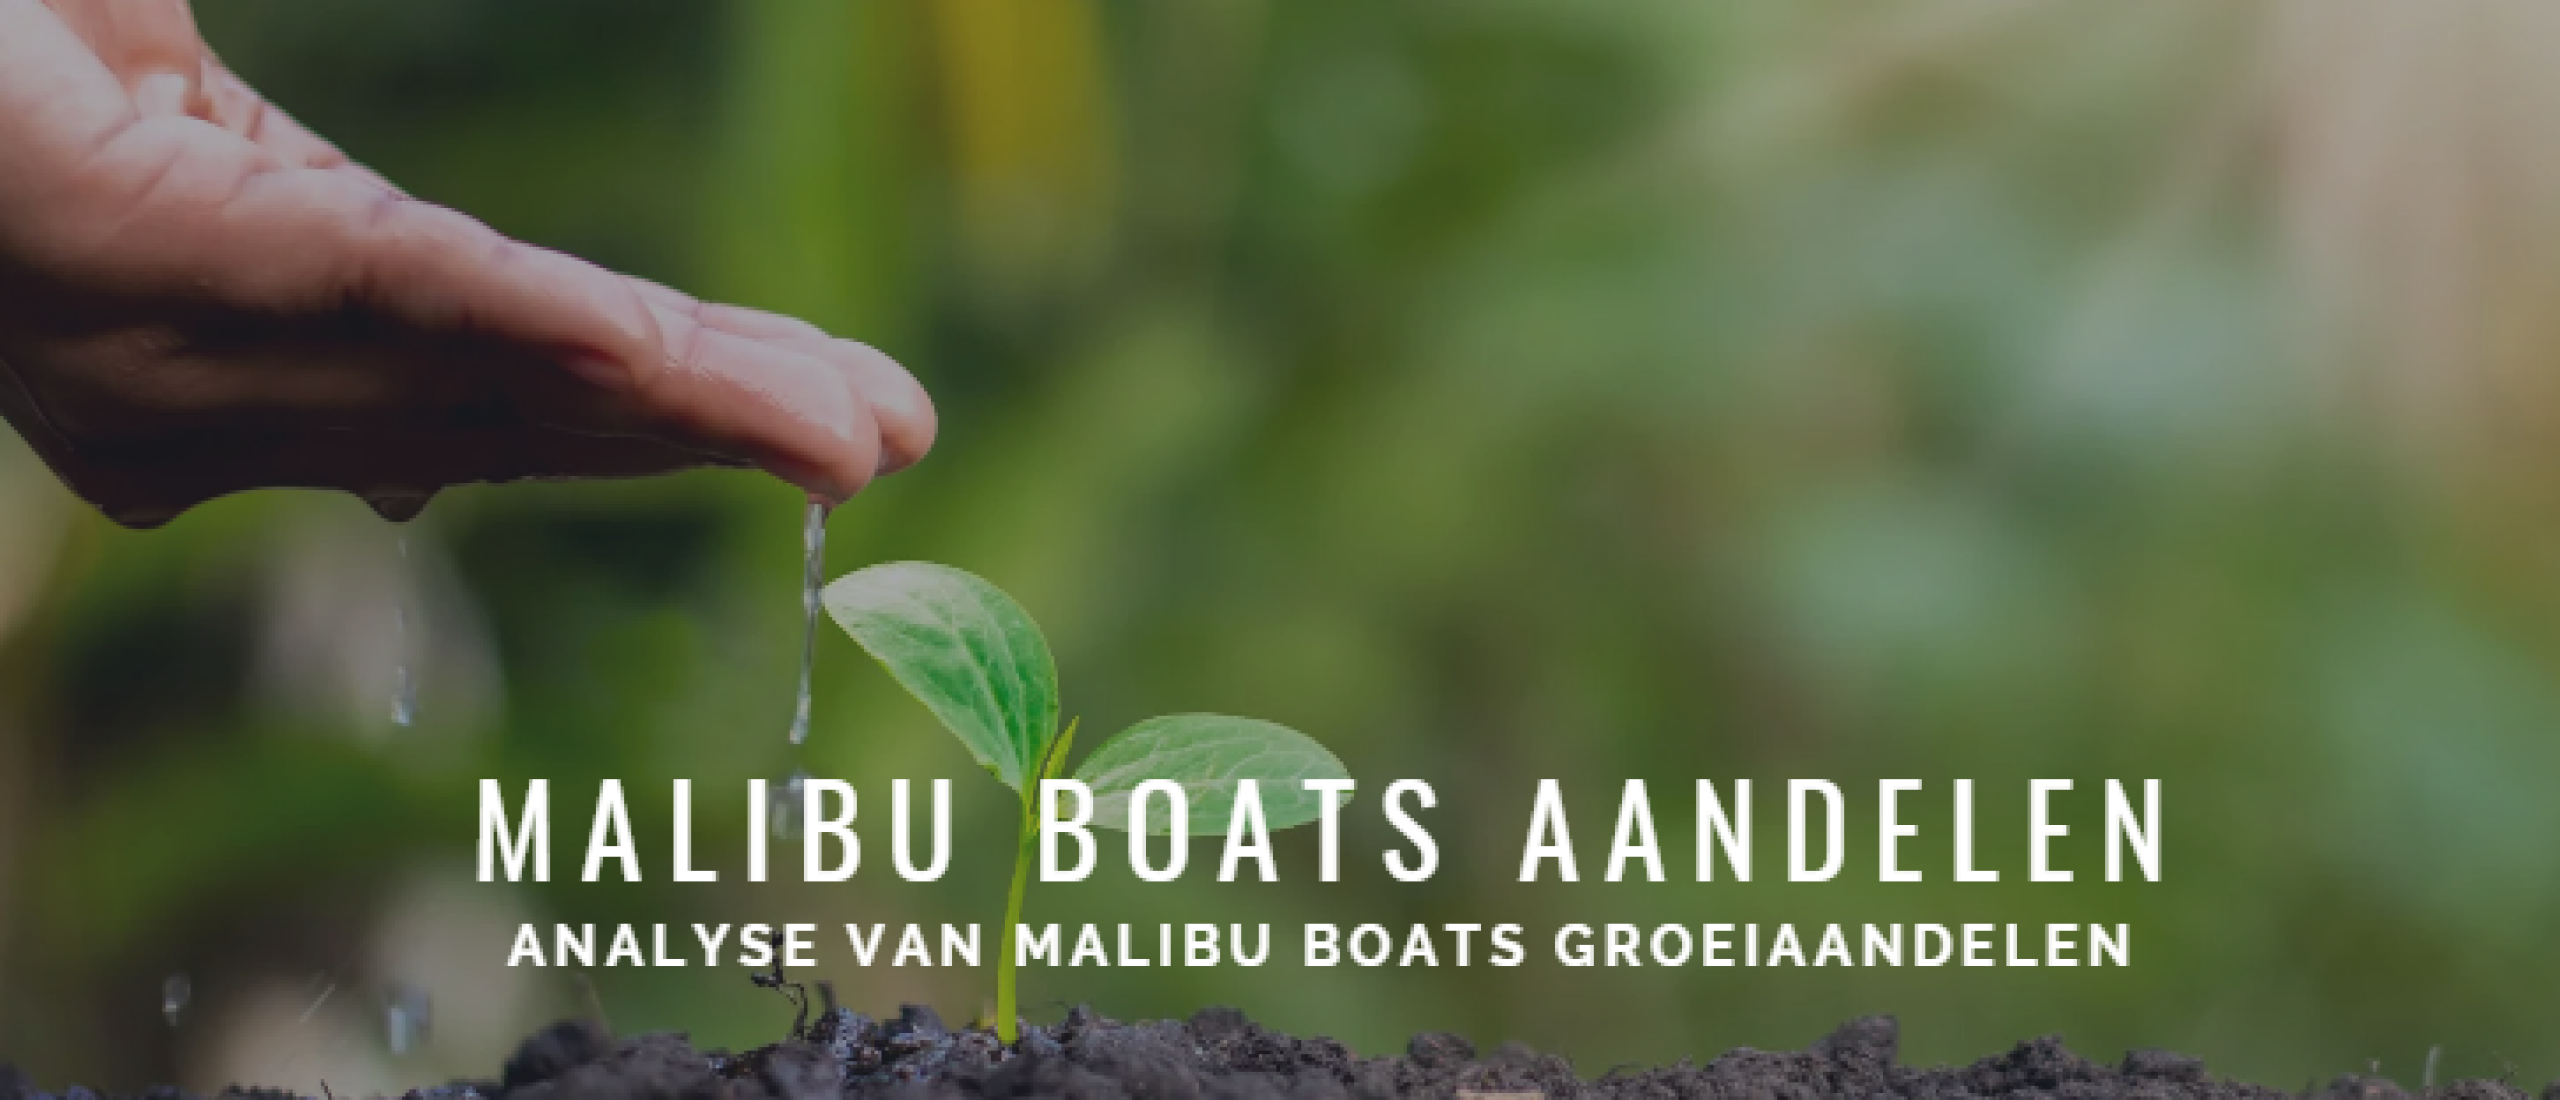 Malibu Boats aandelen kopen? Analyse +31% Groei | Happy Investors